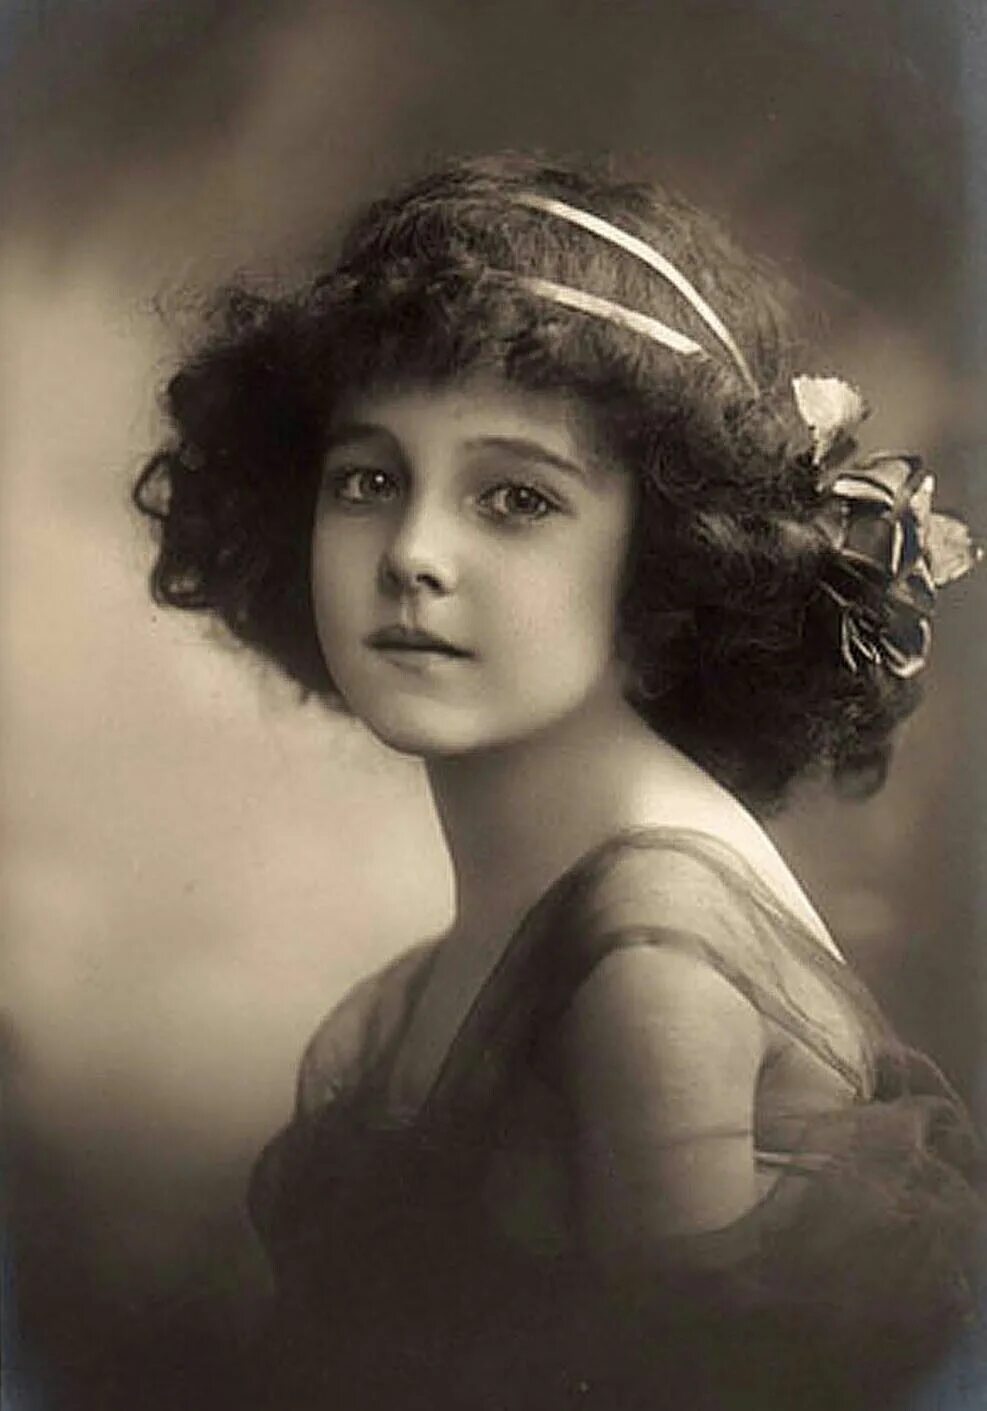 Красавица начала 20 века. Девочки эдвардианской эпохи 1900-1910-е годы. Фотопортрет в стиле ретро.